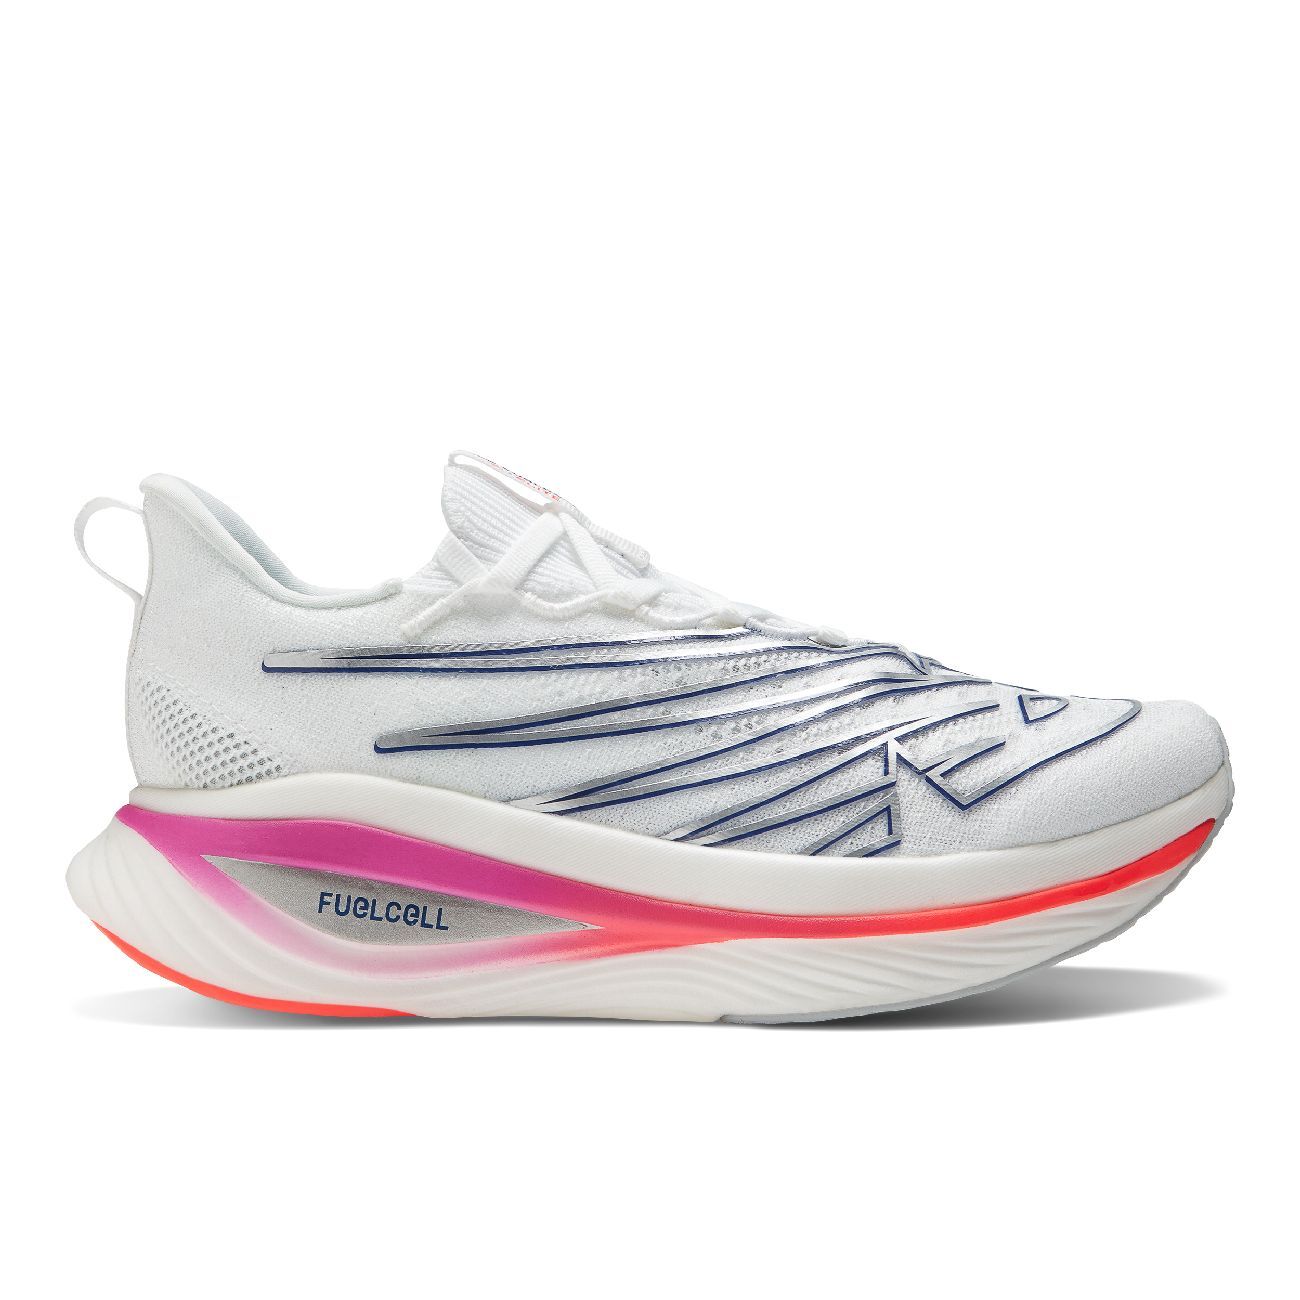 New Balance Fuelcell SC Elite V2 - Running shoes - Women's